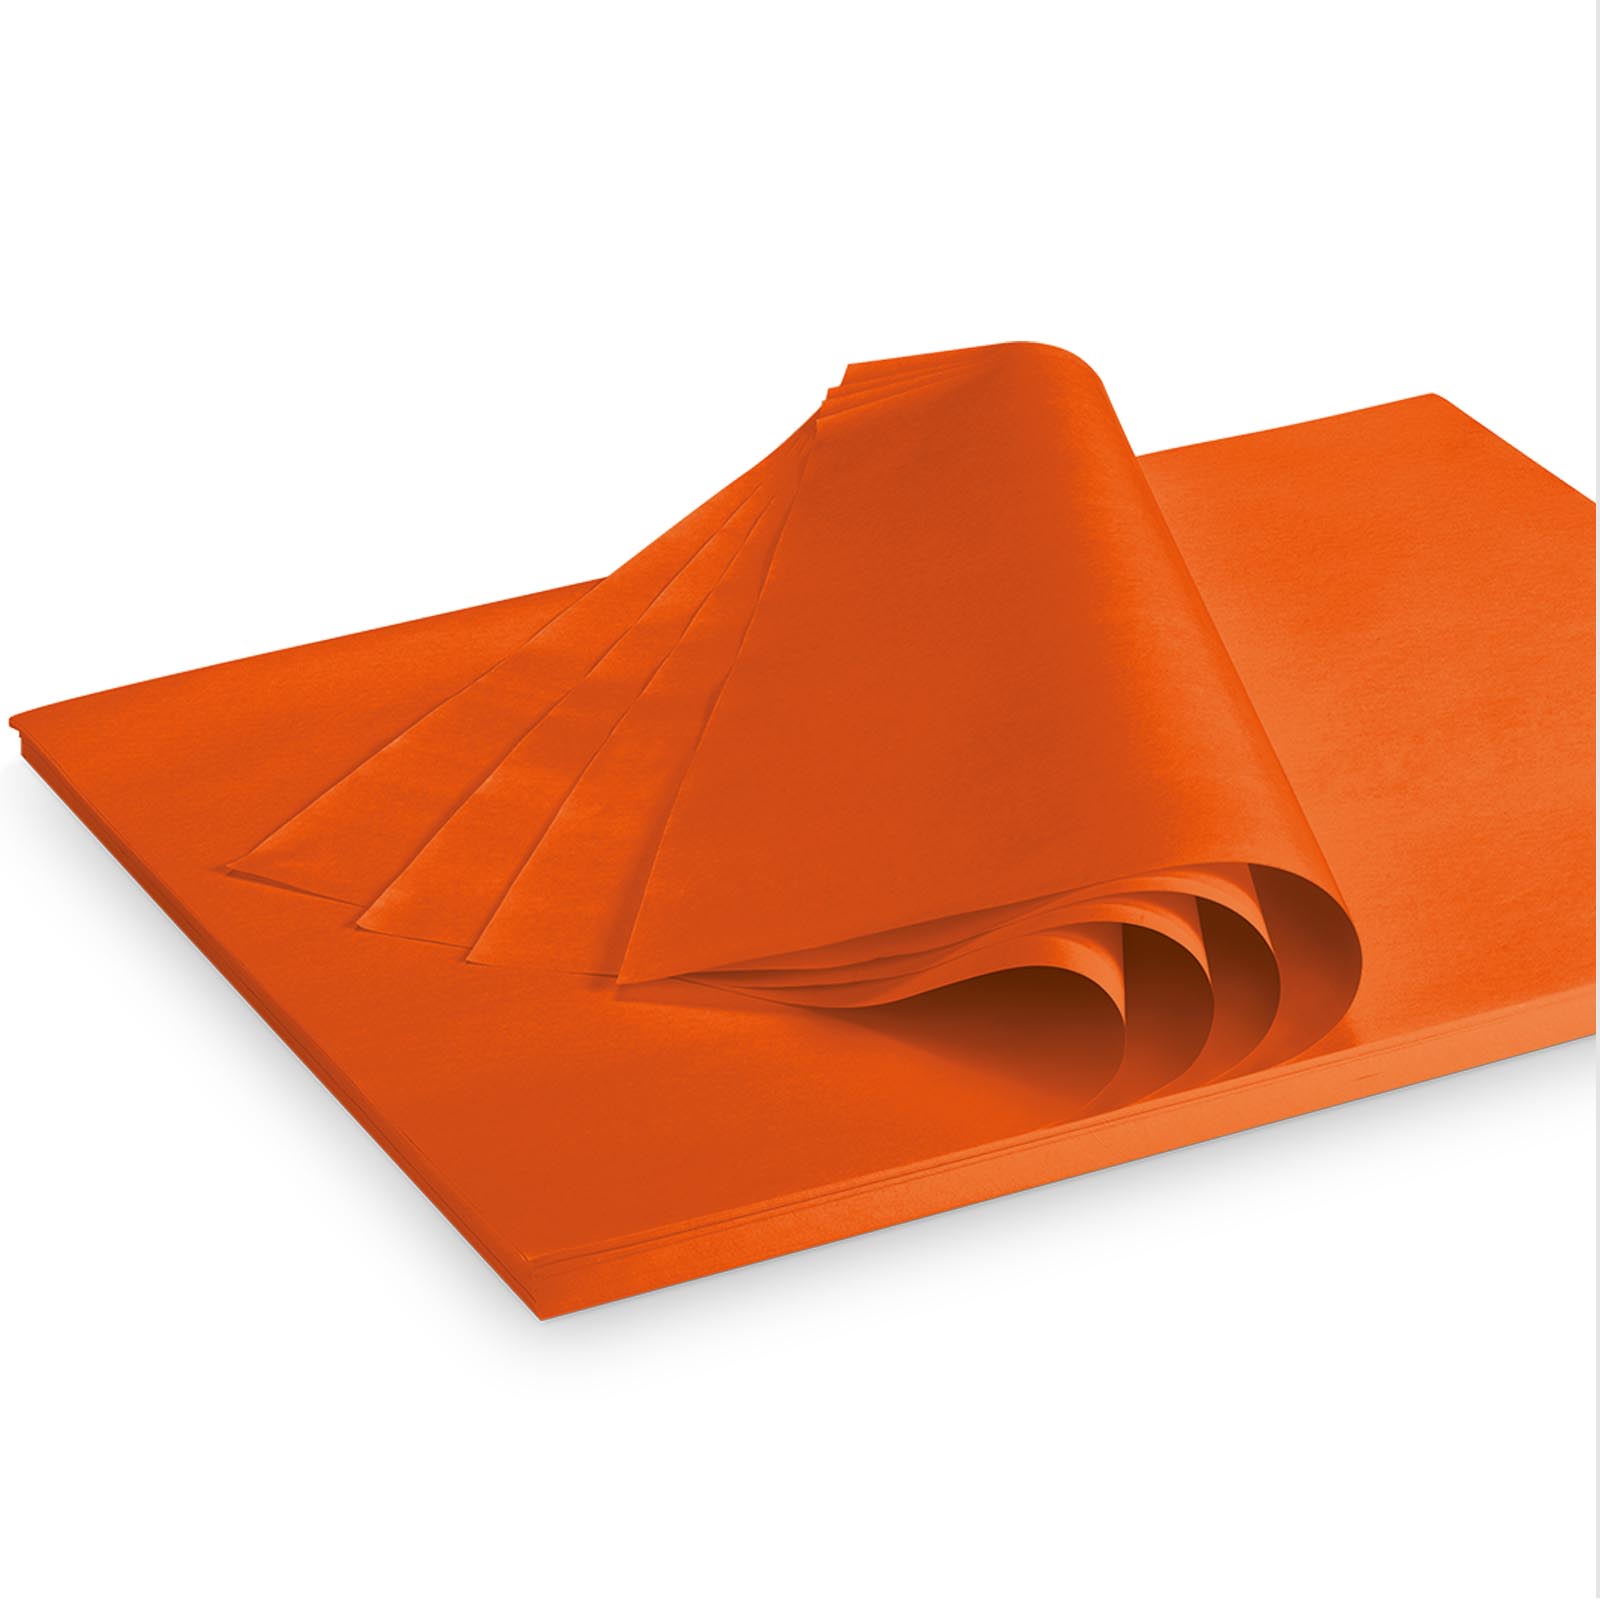 Seidenpapier orange 375x500mm 35g/m²,300 Bogen/ Karton = 2kg